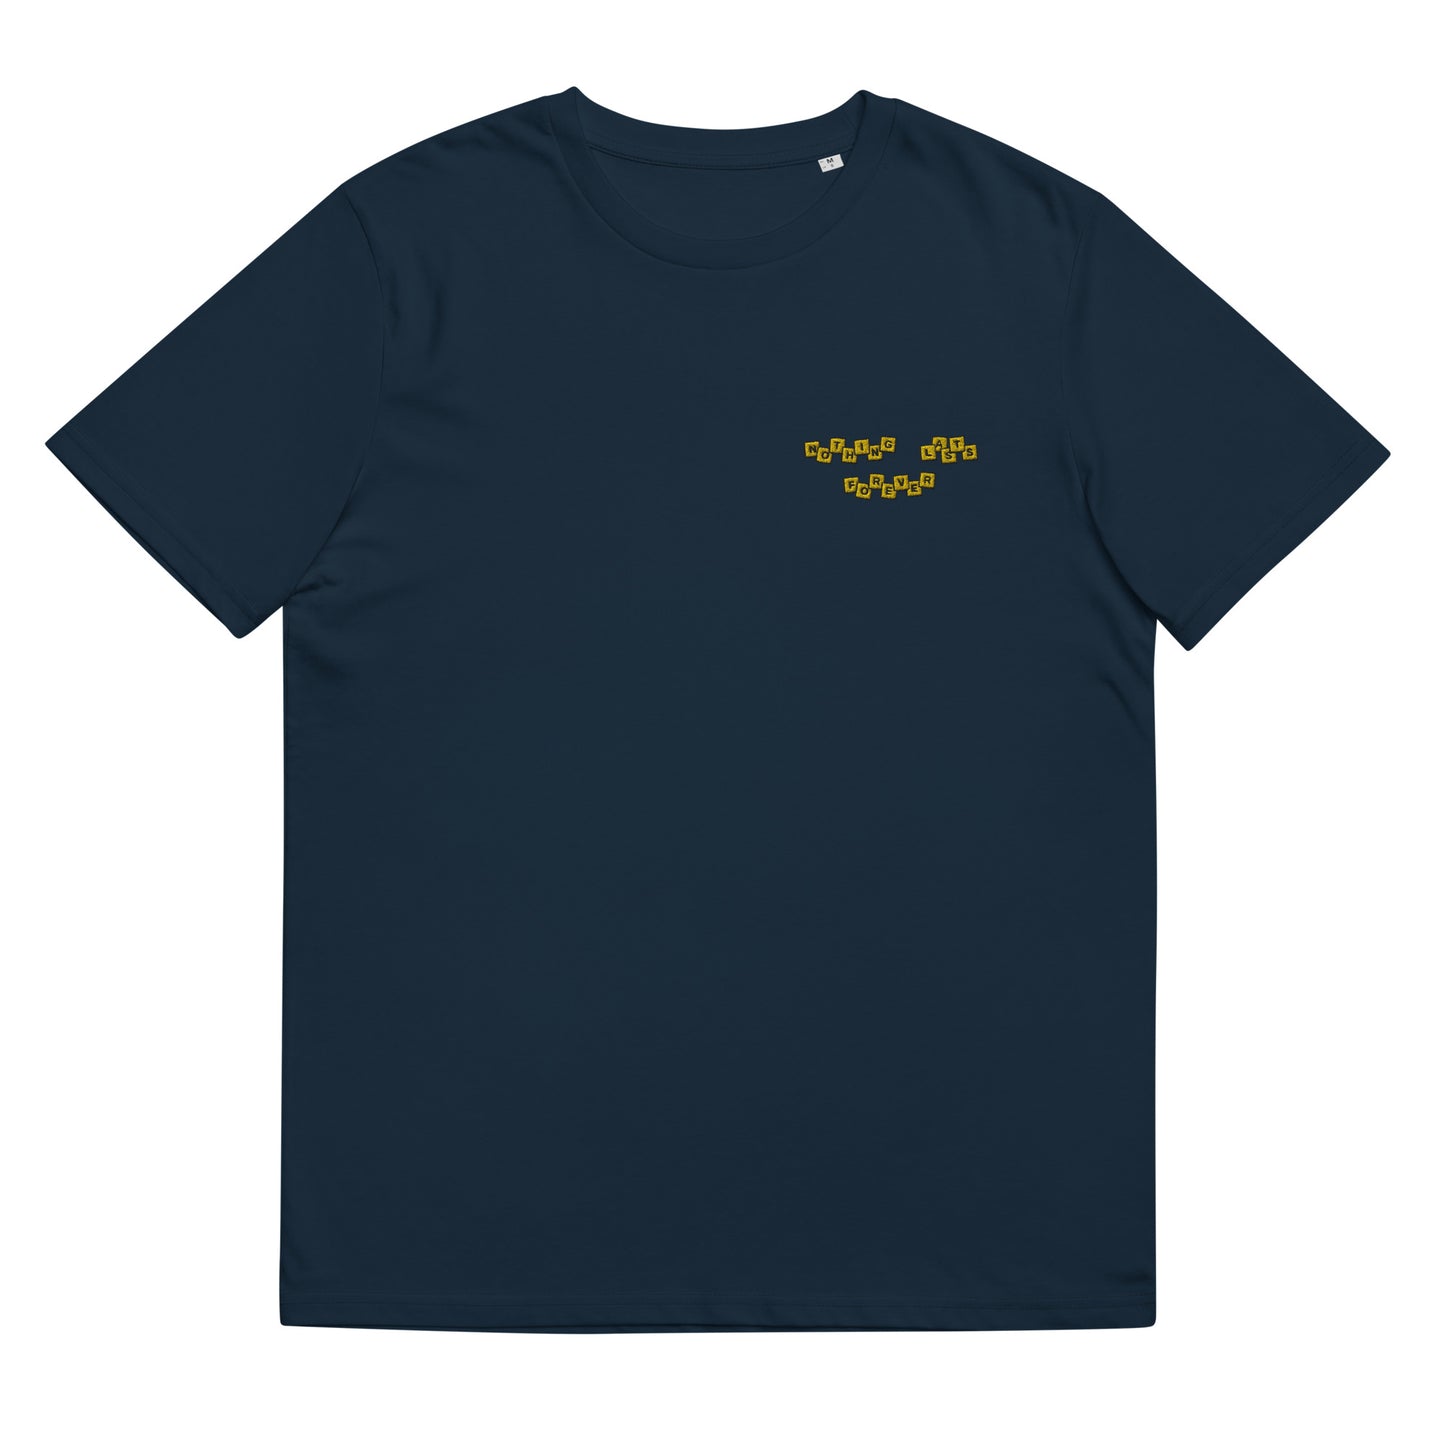 Unisex Organic T-Shirt - Nothing Lasts Forever